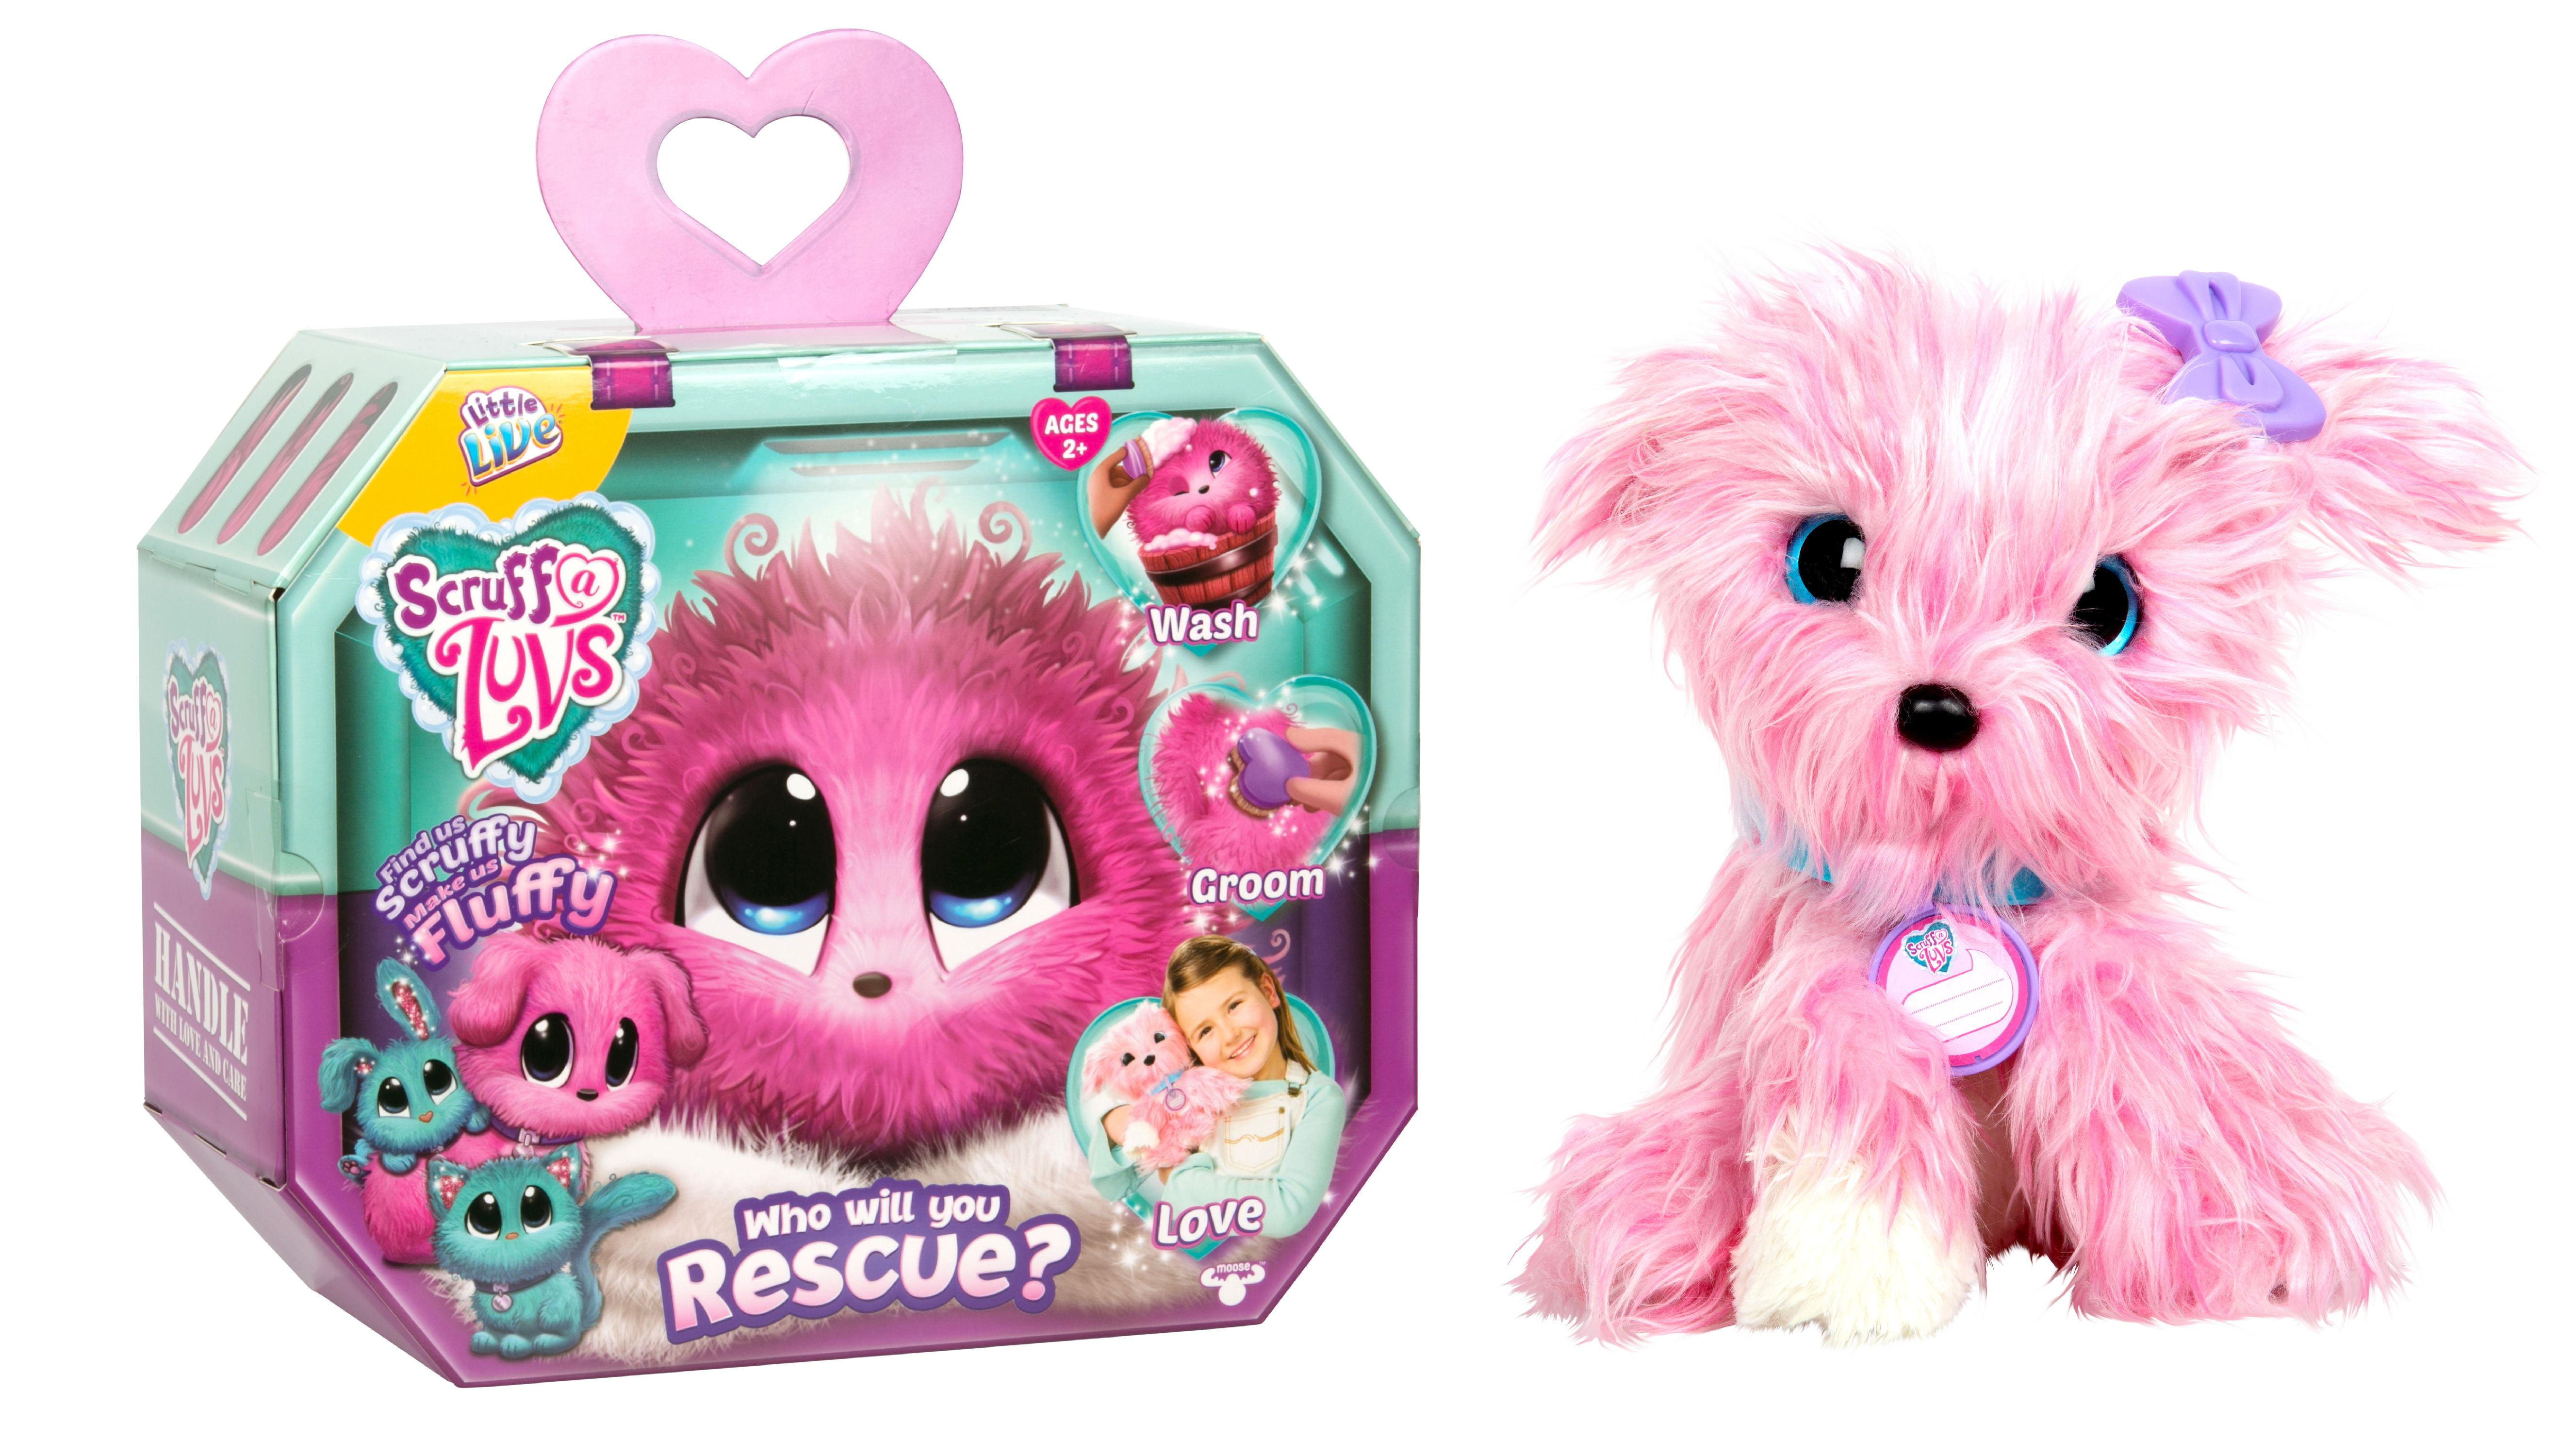 Scruff A Luvs Little Live Girl Plush Mystery Rescue Pet Soft Toy Kids Gift Xmas. 